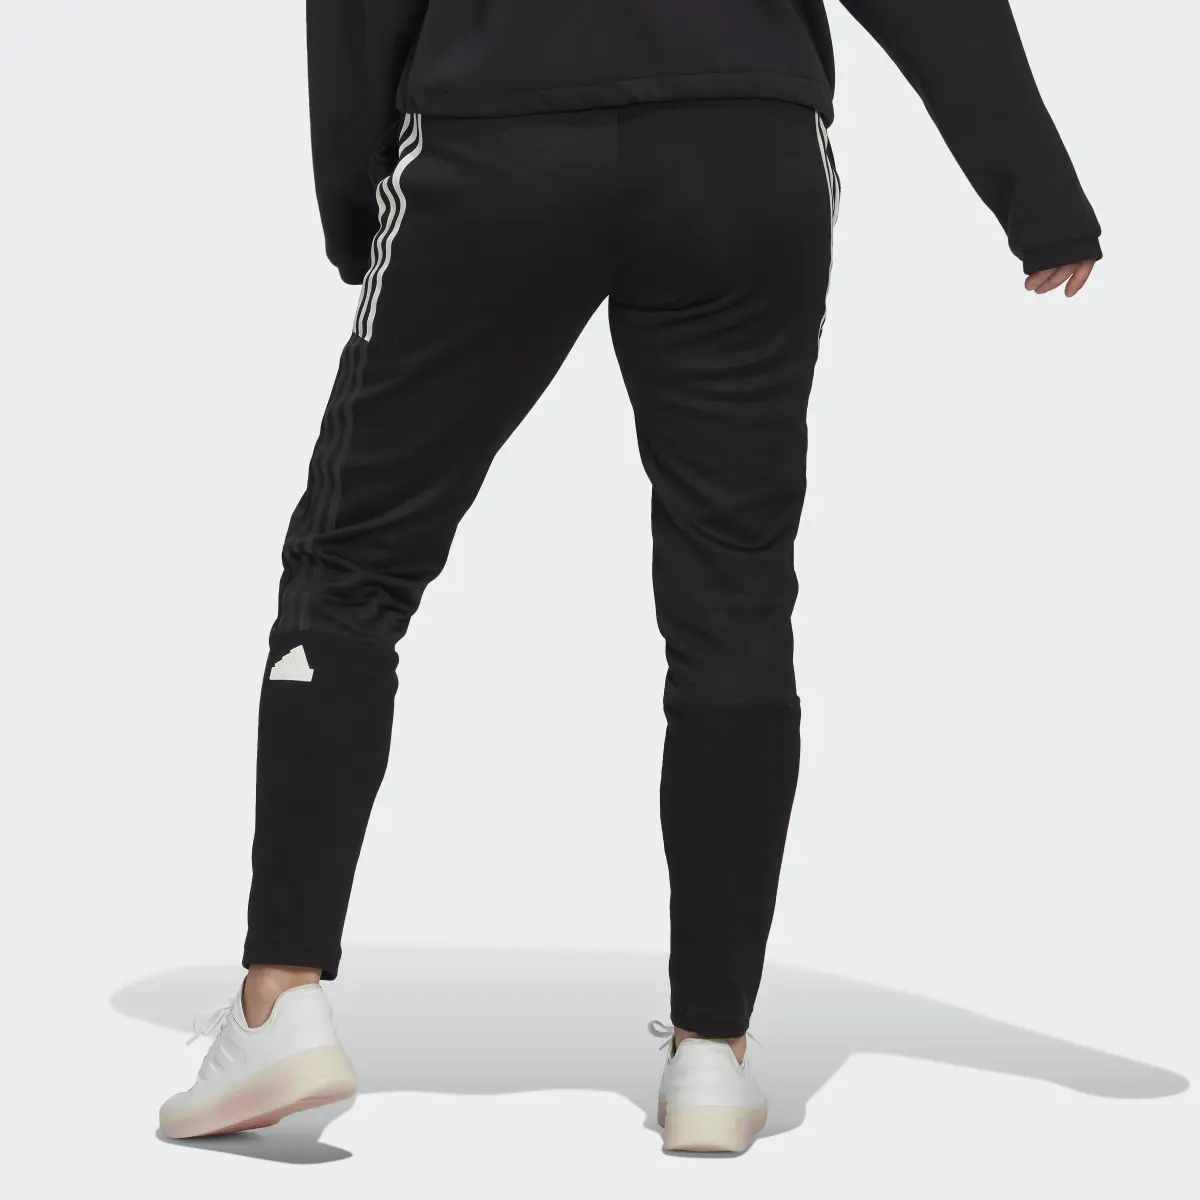 Adidas Tricot Pants. 2